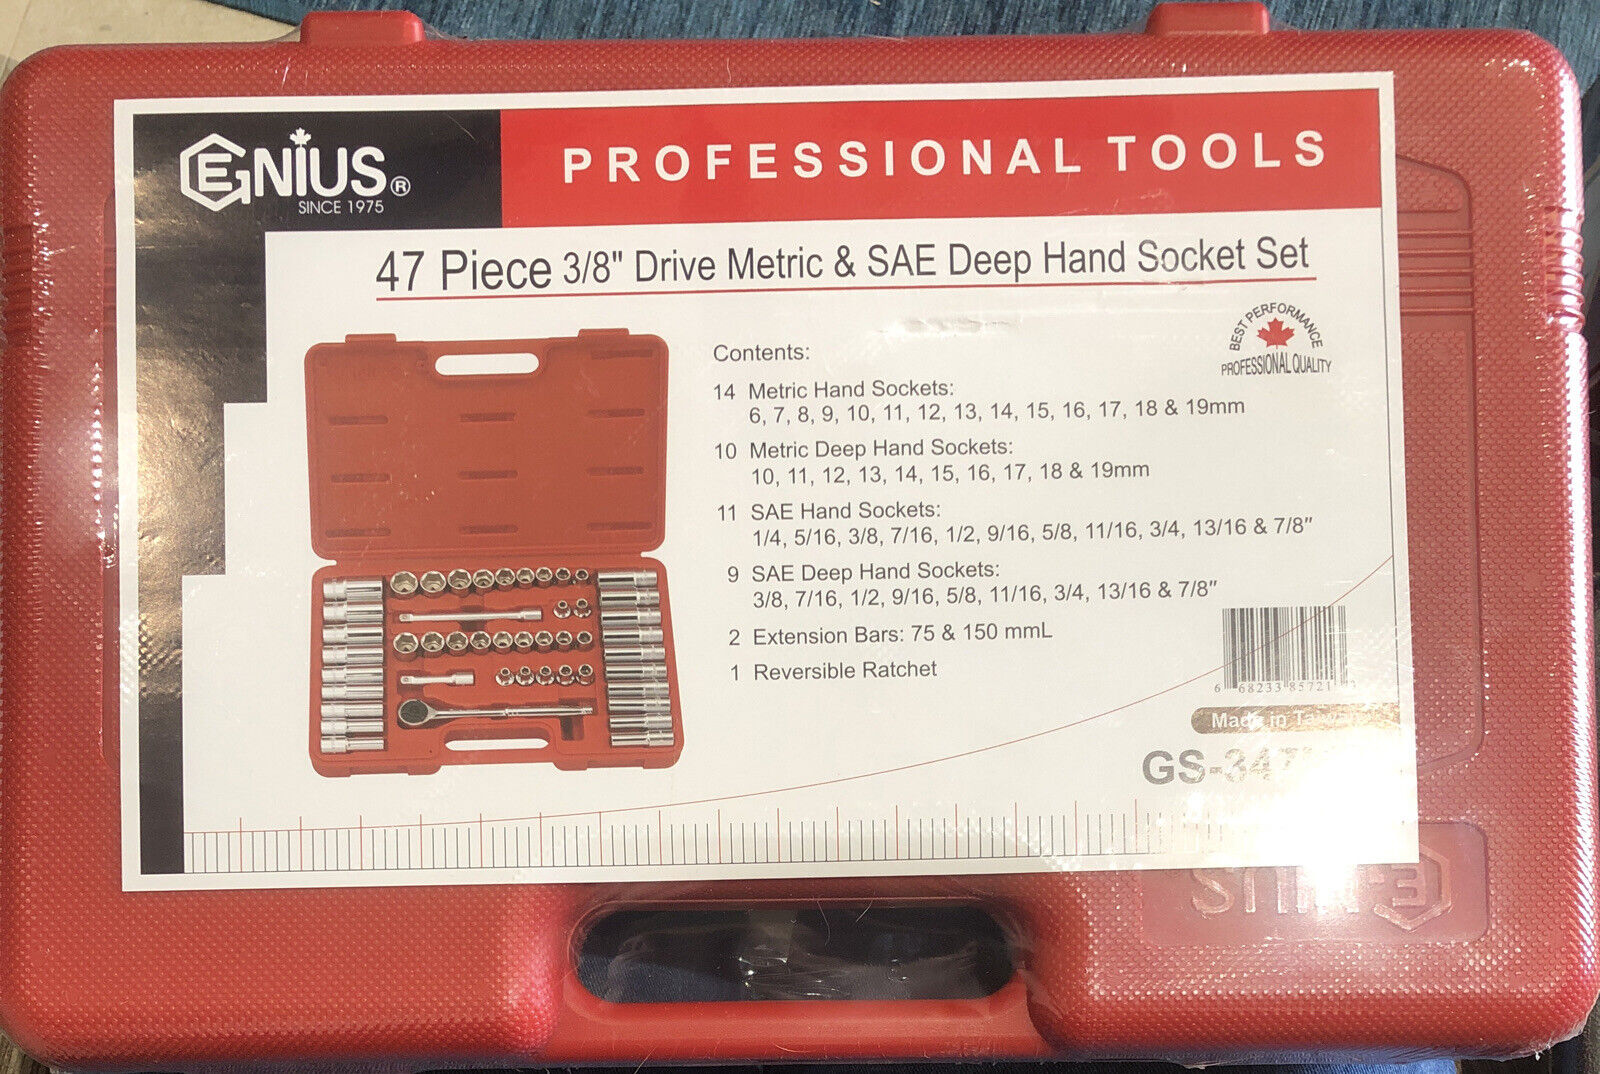 GENIUS Professional Tools 47 Piece 3/8” Drive Metric & SAE Deep Hand Socket Set